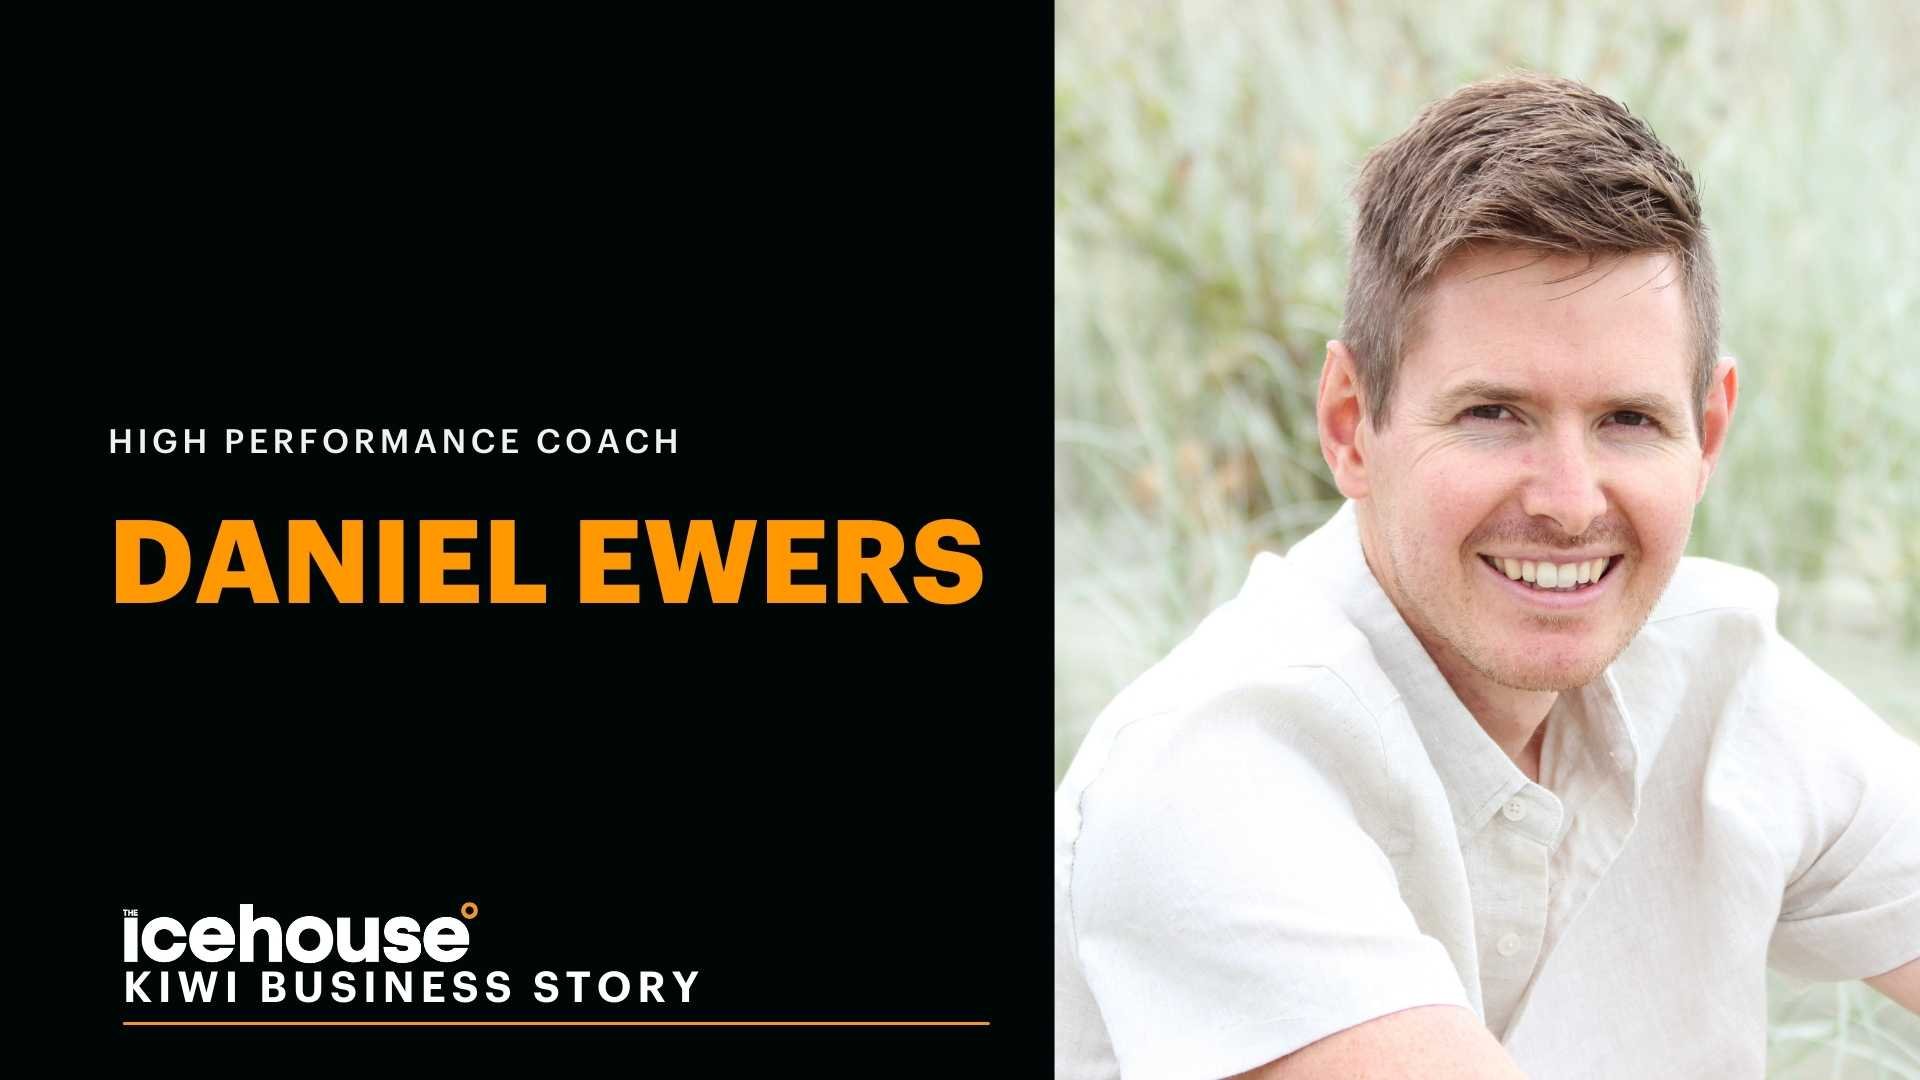 Kiwi Business Story Daniel Ewers, High Performance Coach_Kiwi Business Story_Image